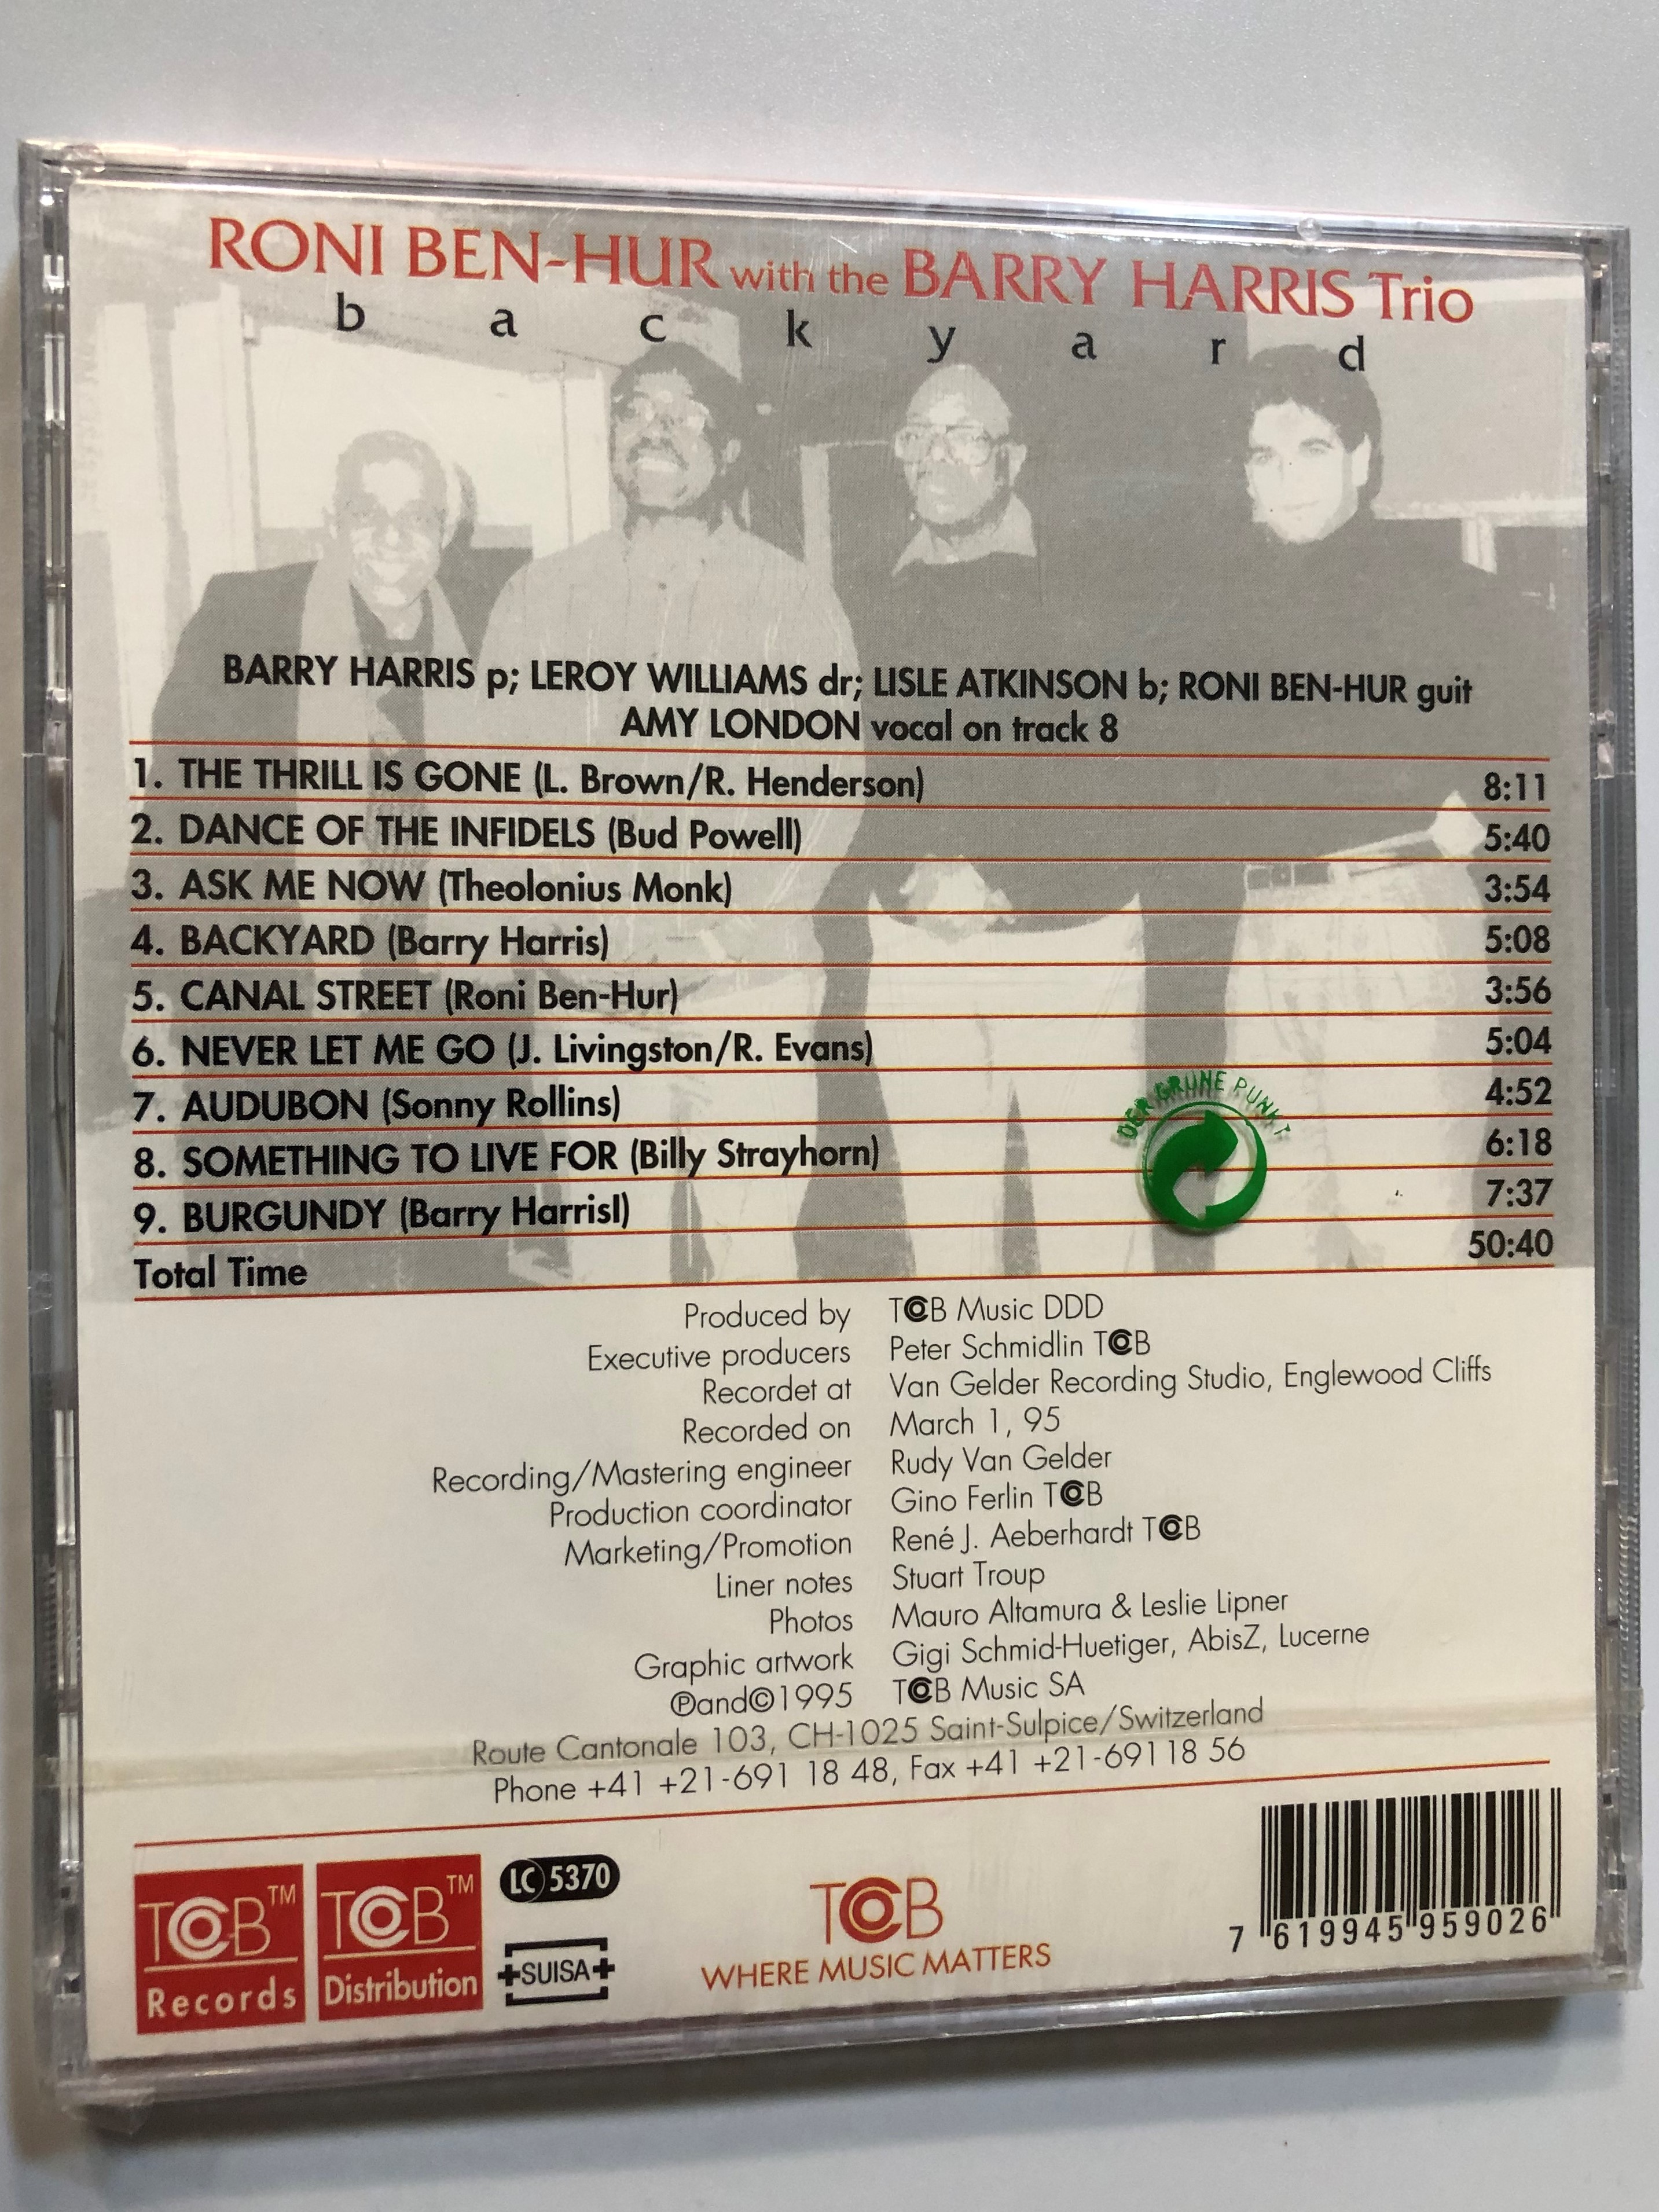 roni-ben-hur-with-the-barry-harris-trio-backyard-tcb-records-audio-cd-1995-95902-2-.jpg